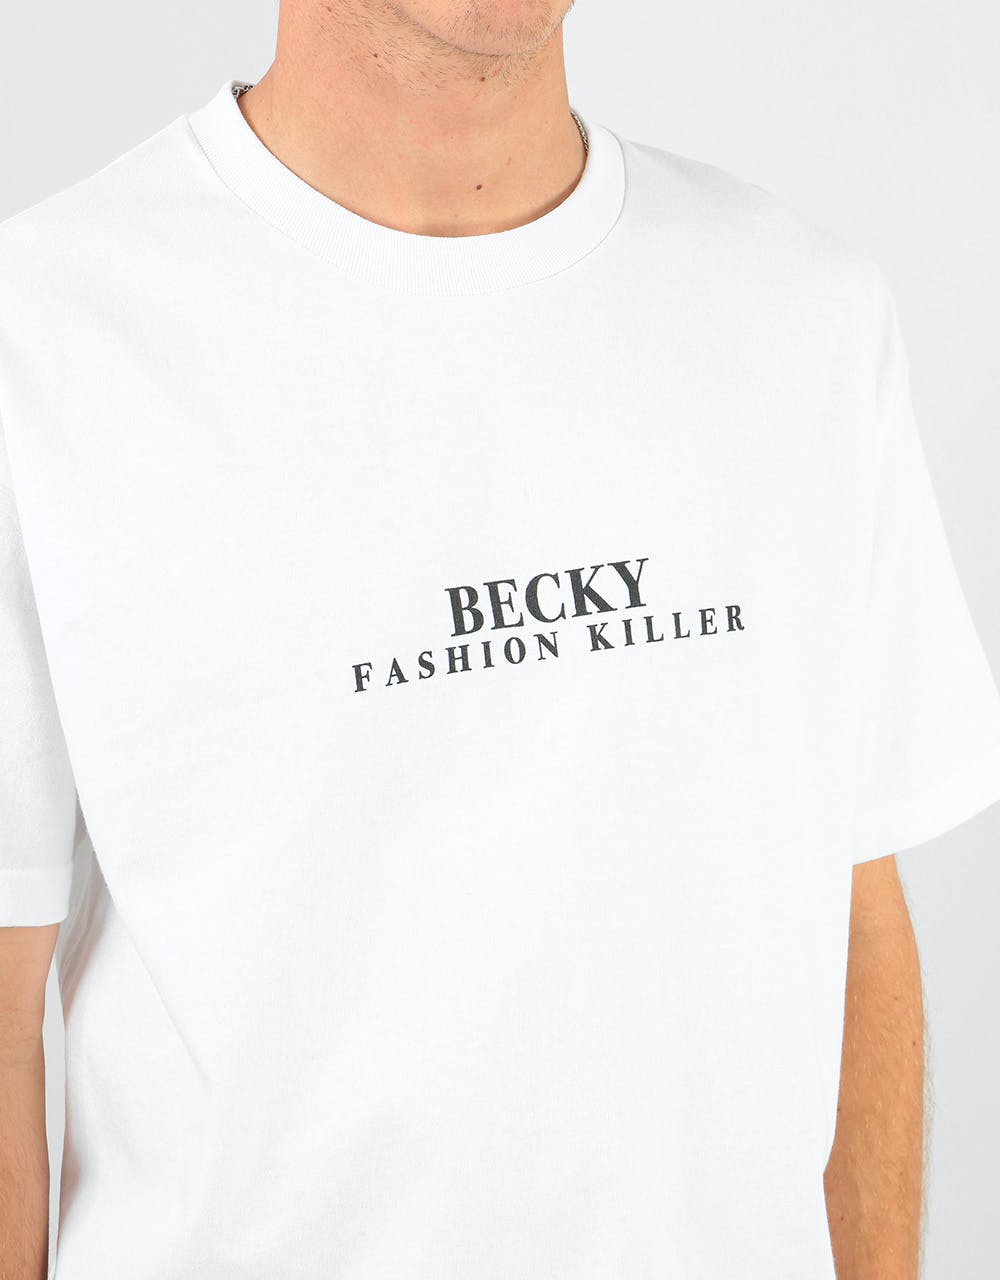 Becky Factory Fashion Killer T-Shirt - White